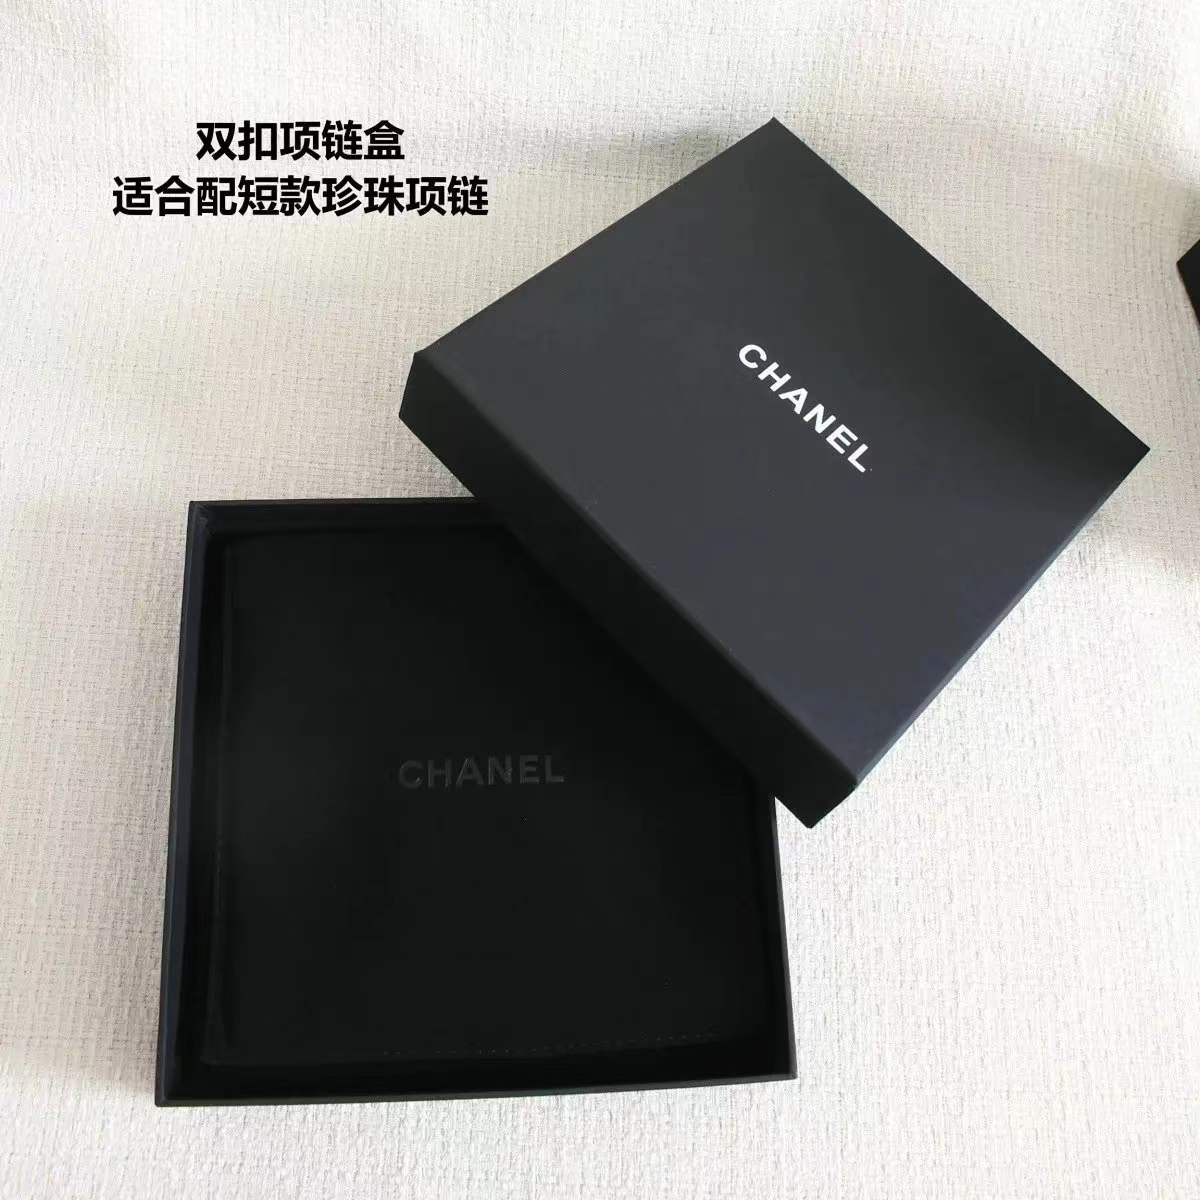 1:1 Chanel bracelet/necklace box 1pcs